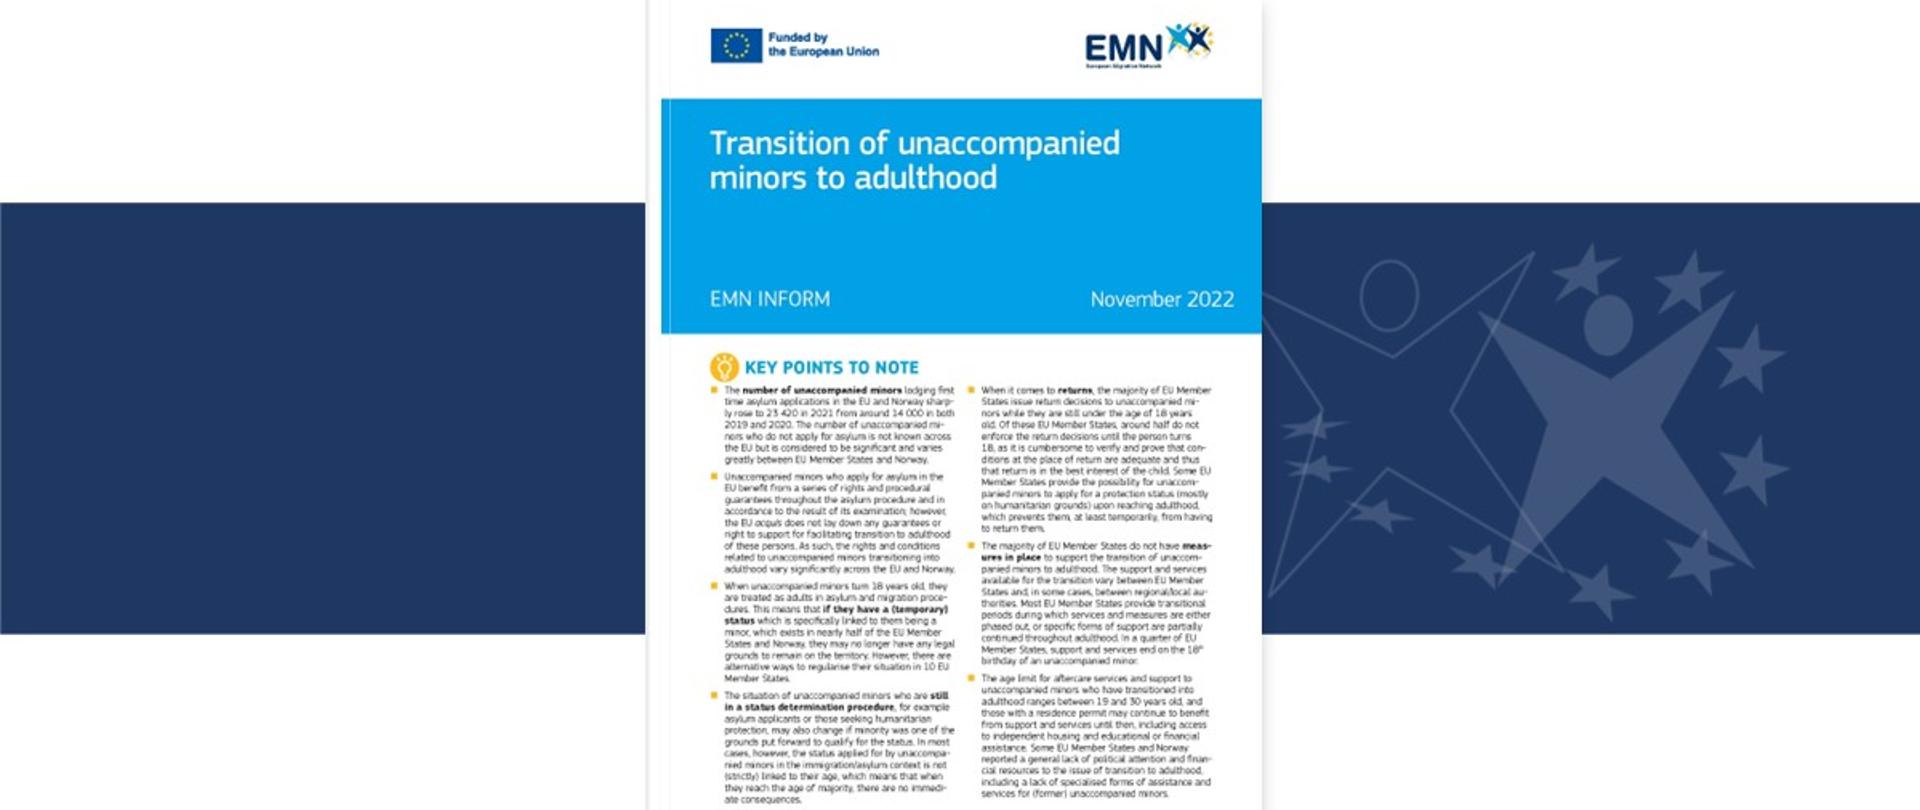 EMN Inform on transition of unaccompanied minors to adulthood